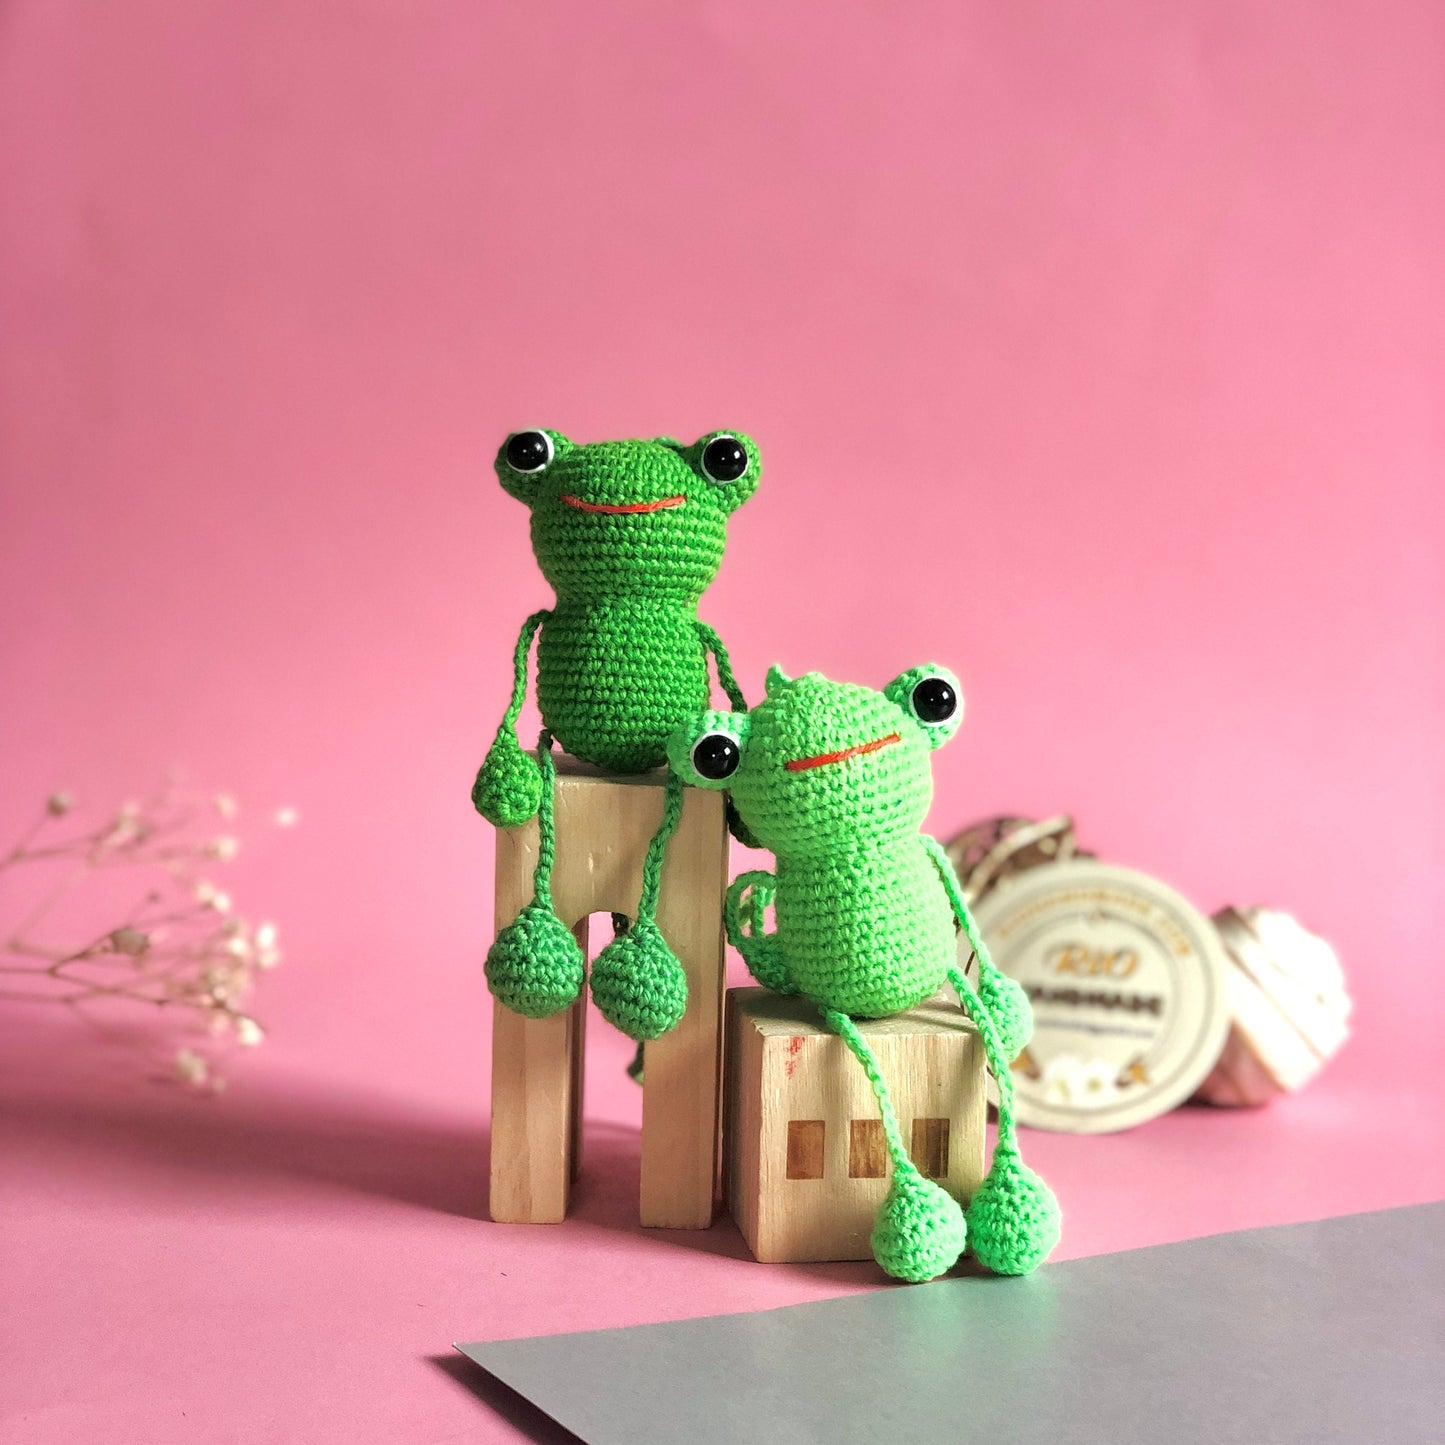 Handmade frog crochet keychain mirror charm crochet amigurumi, plushie toy, gift, car hanging accessory